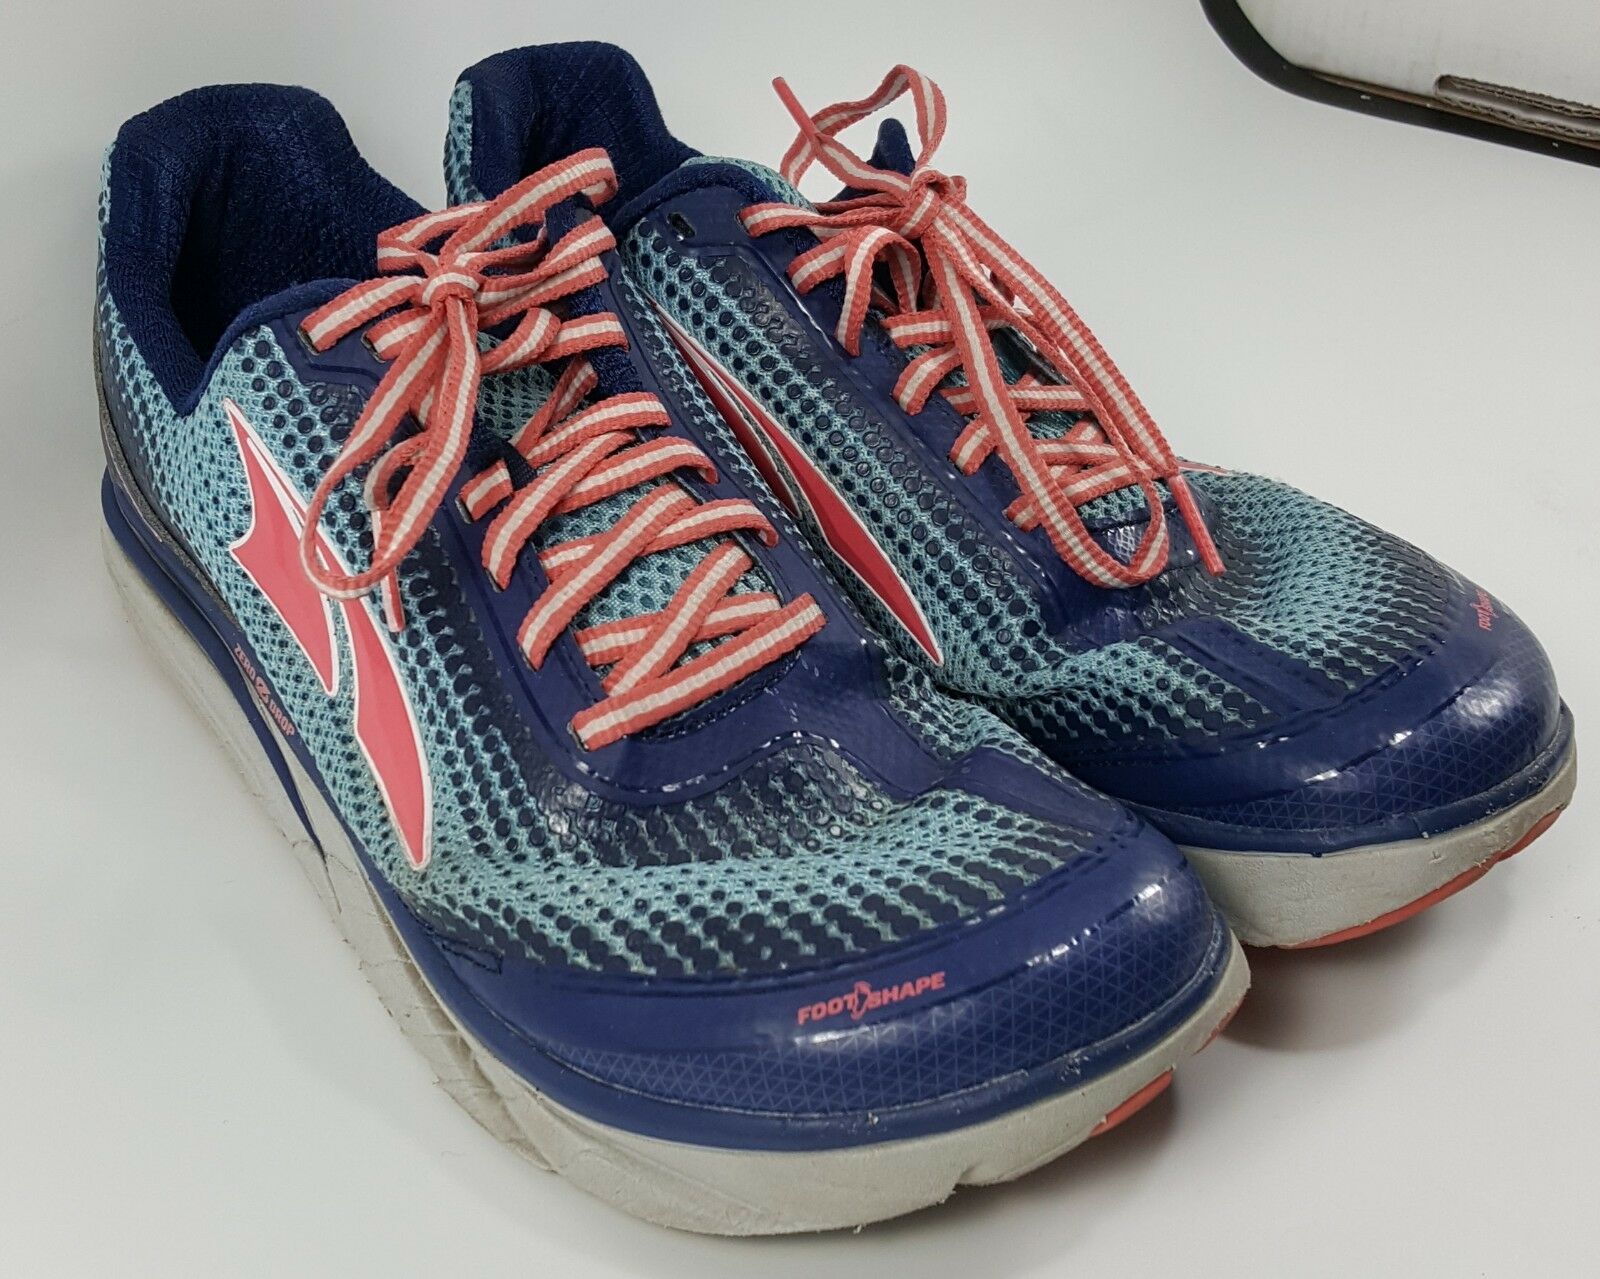 A4 Altra Women's Torin 3.0 Zero Drop Running Walking Shoes Blue Coral Size 9.5